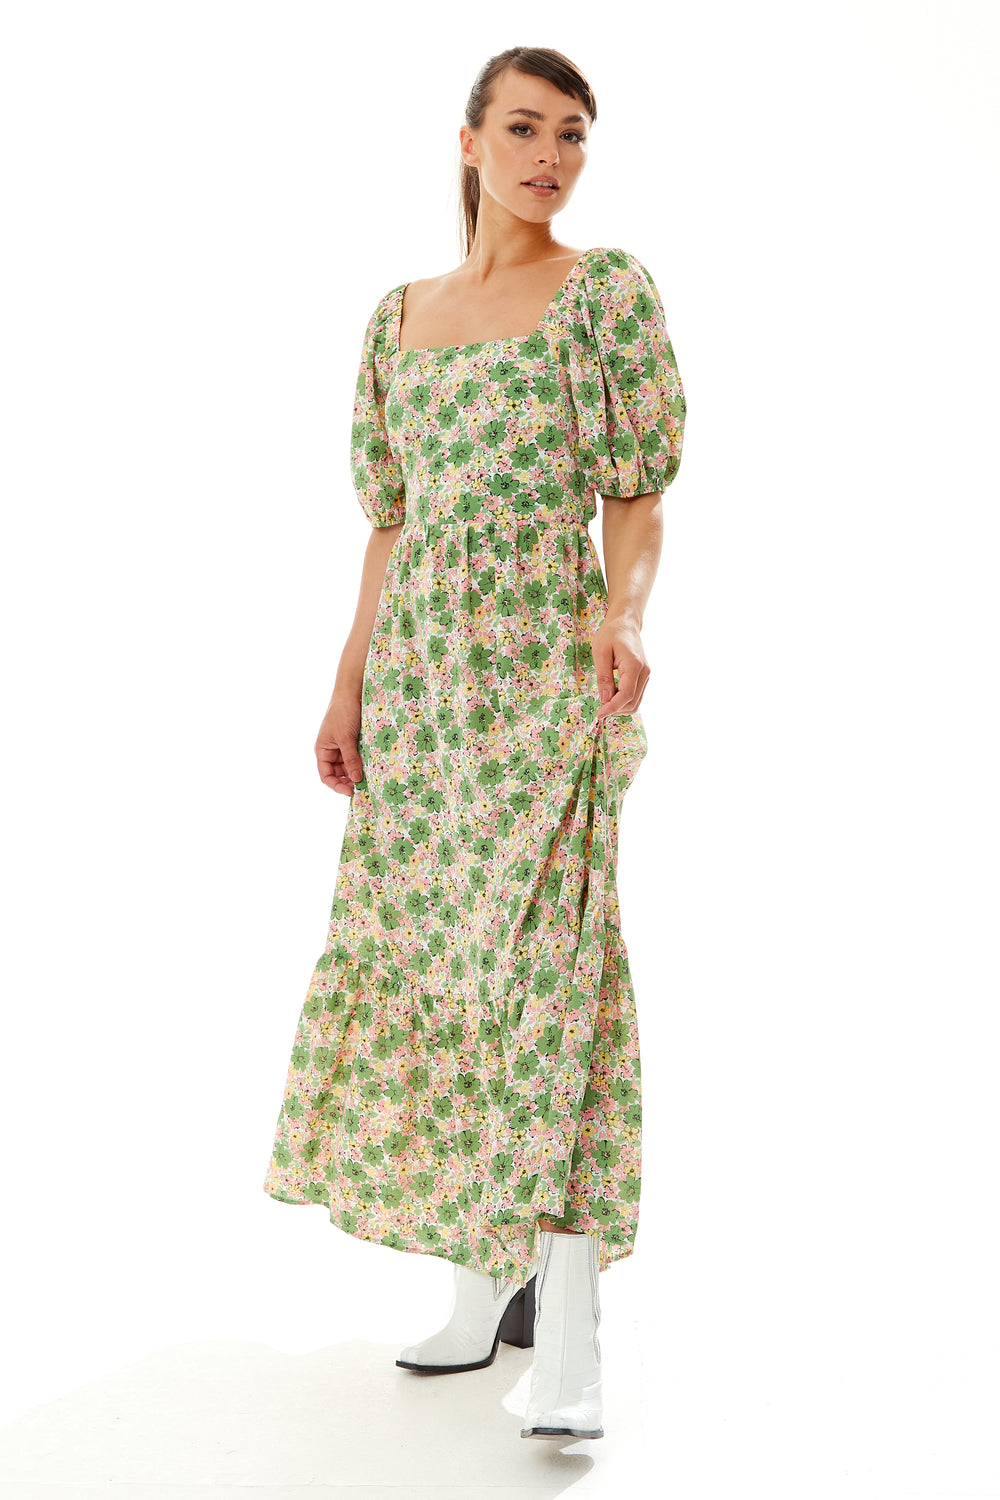 Liquorish Green Floral Maxi Dress with Cut out Back